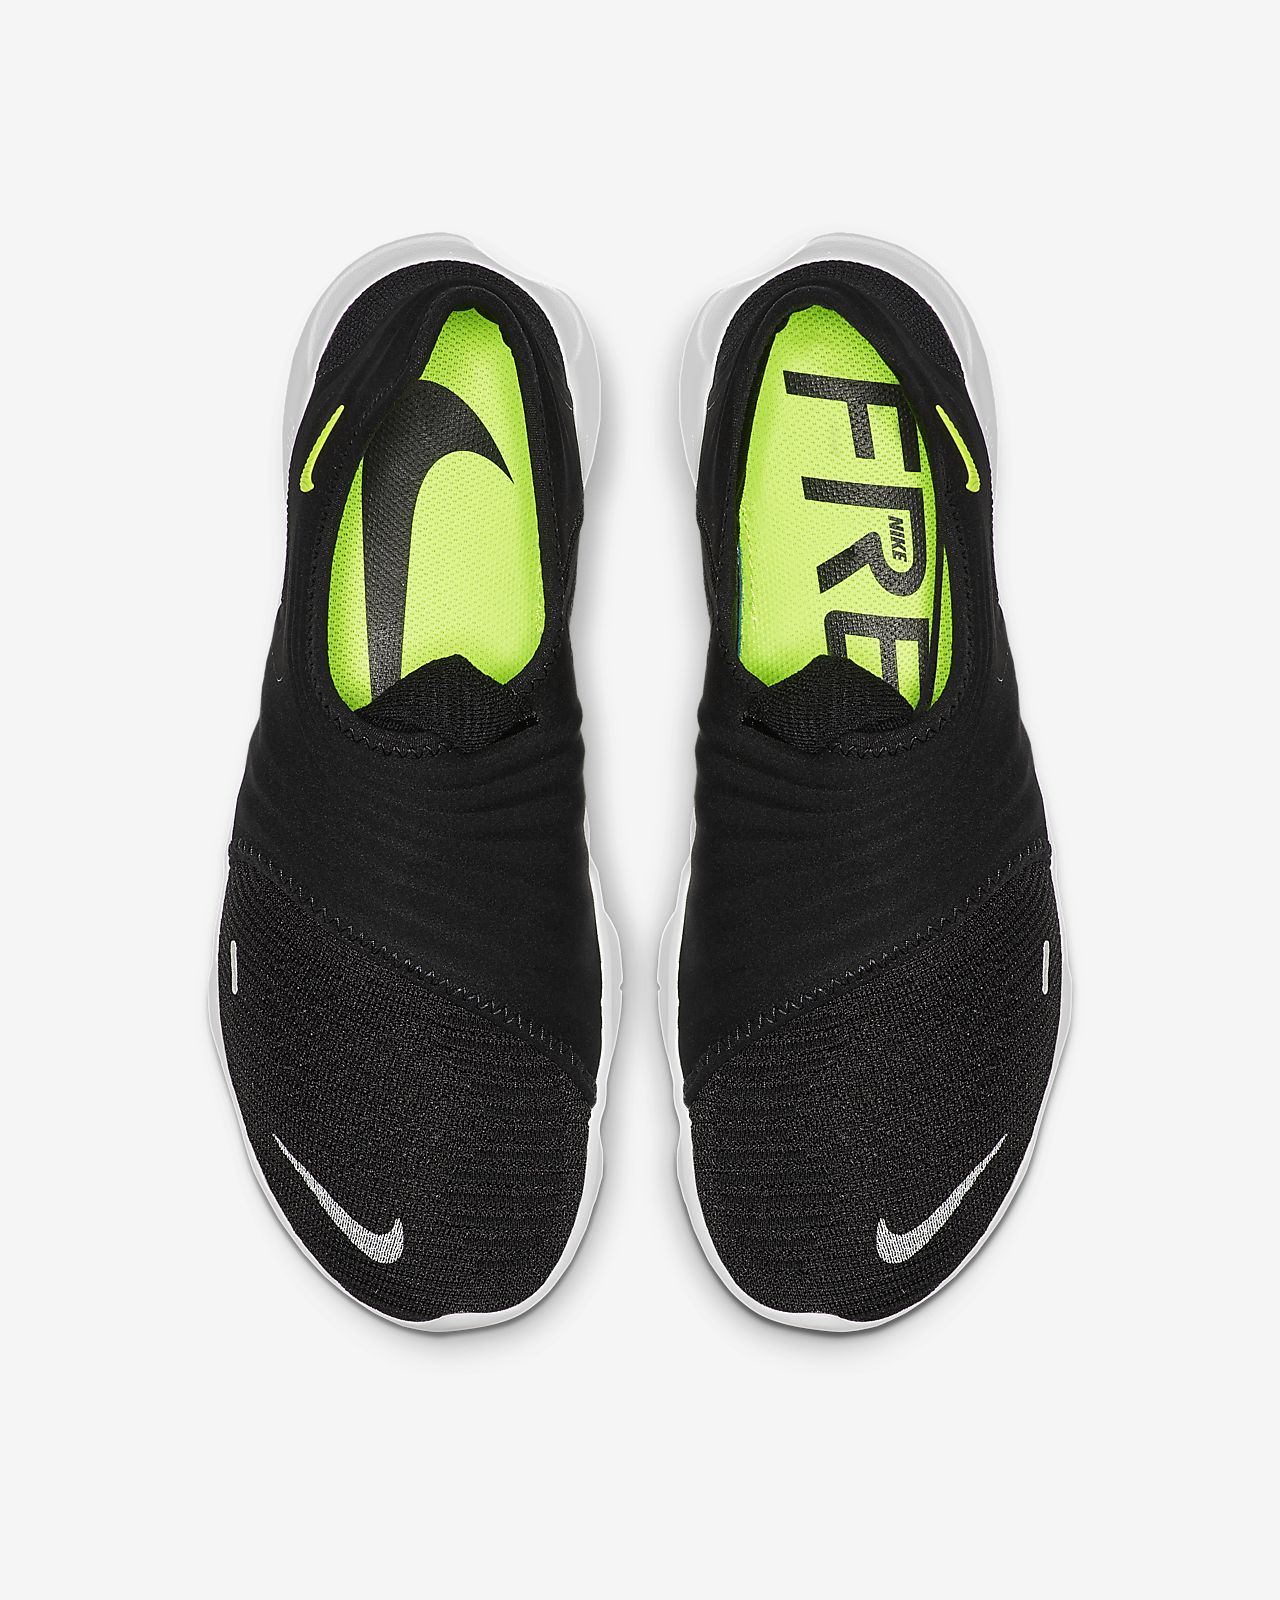 nike free running shoes 3.0